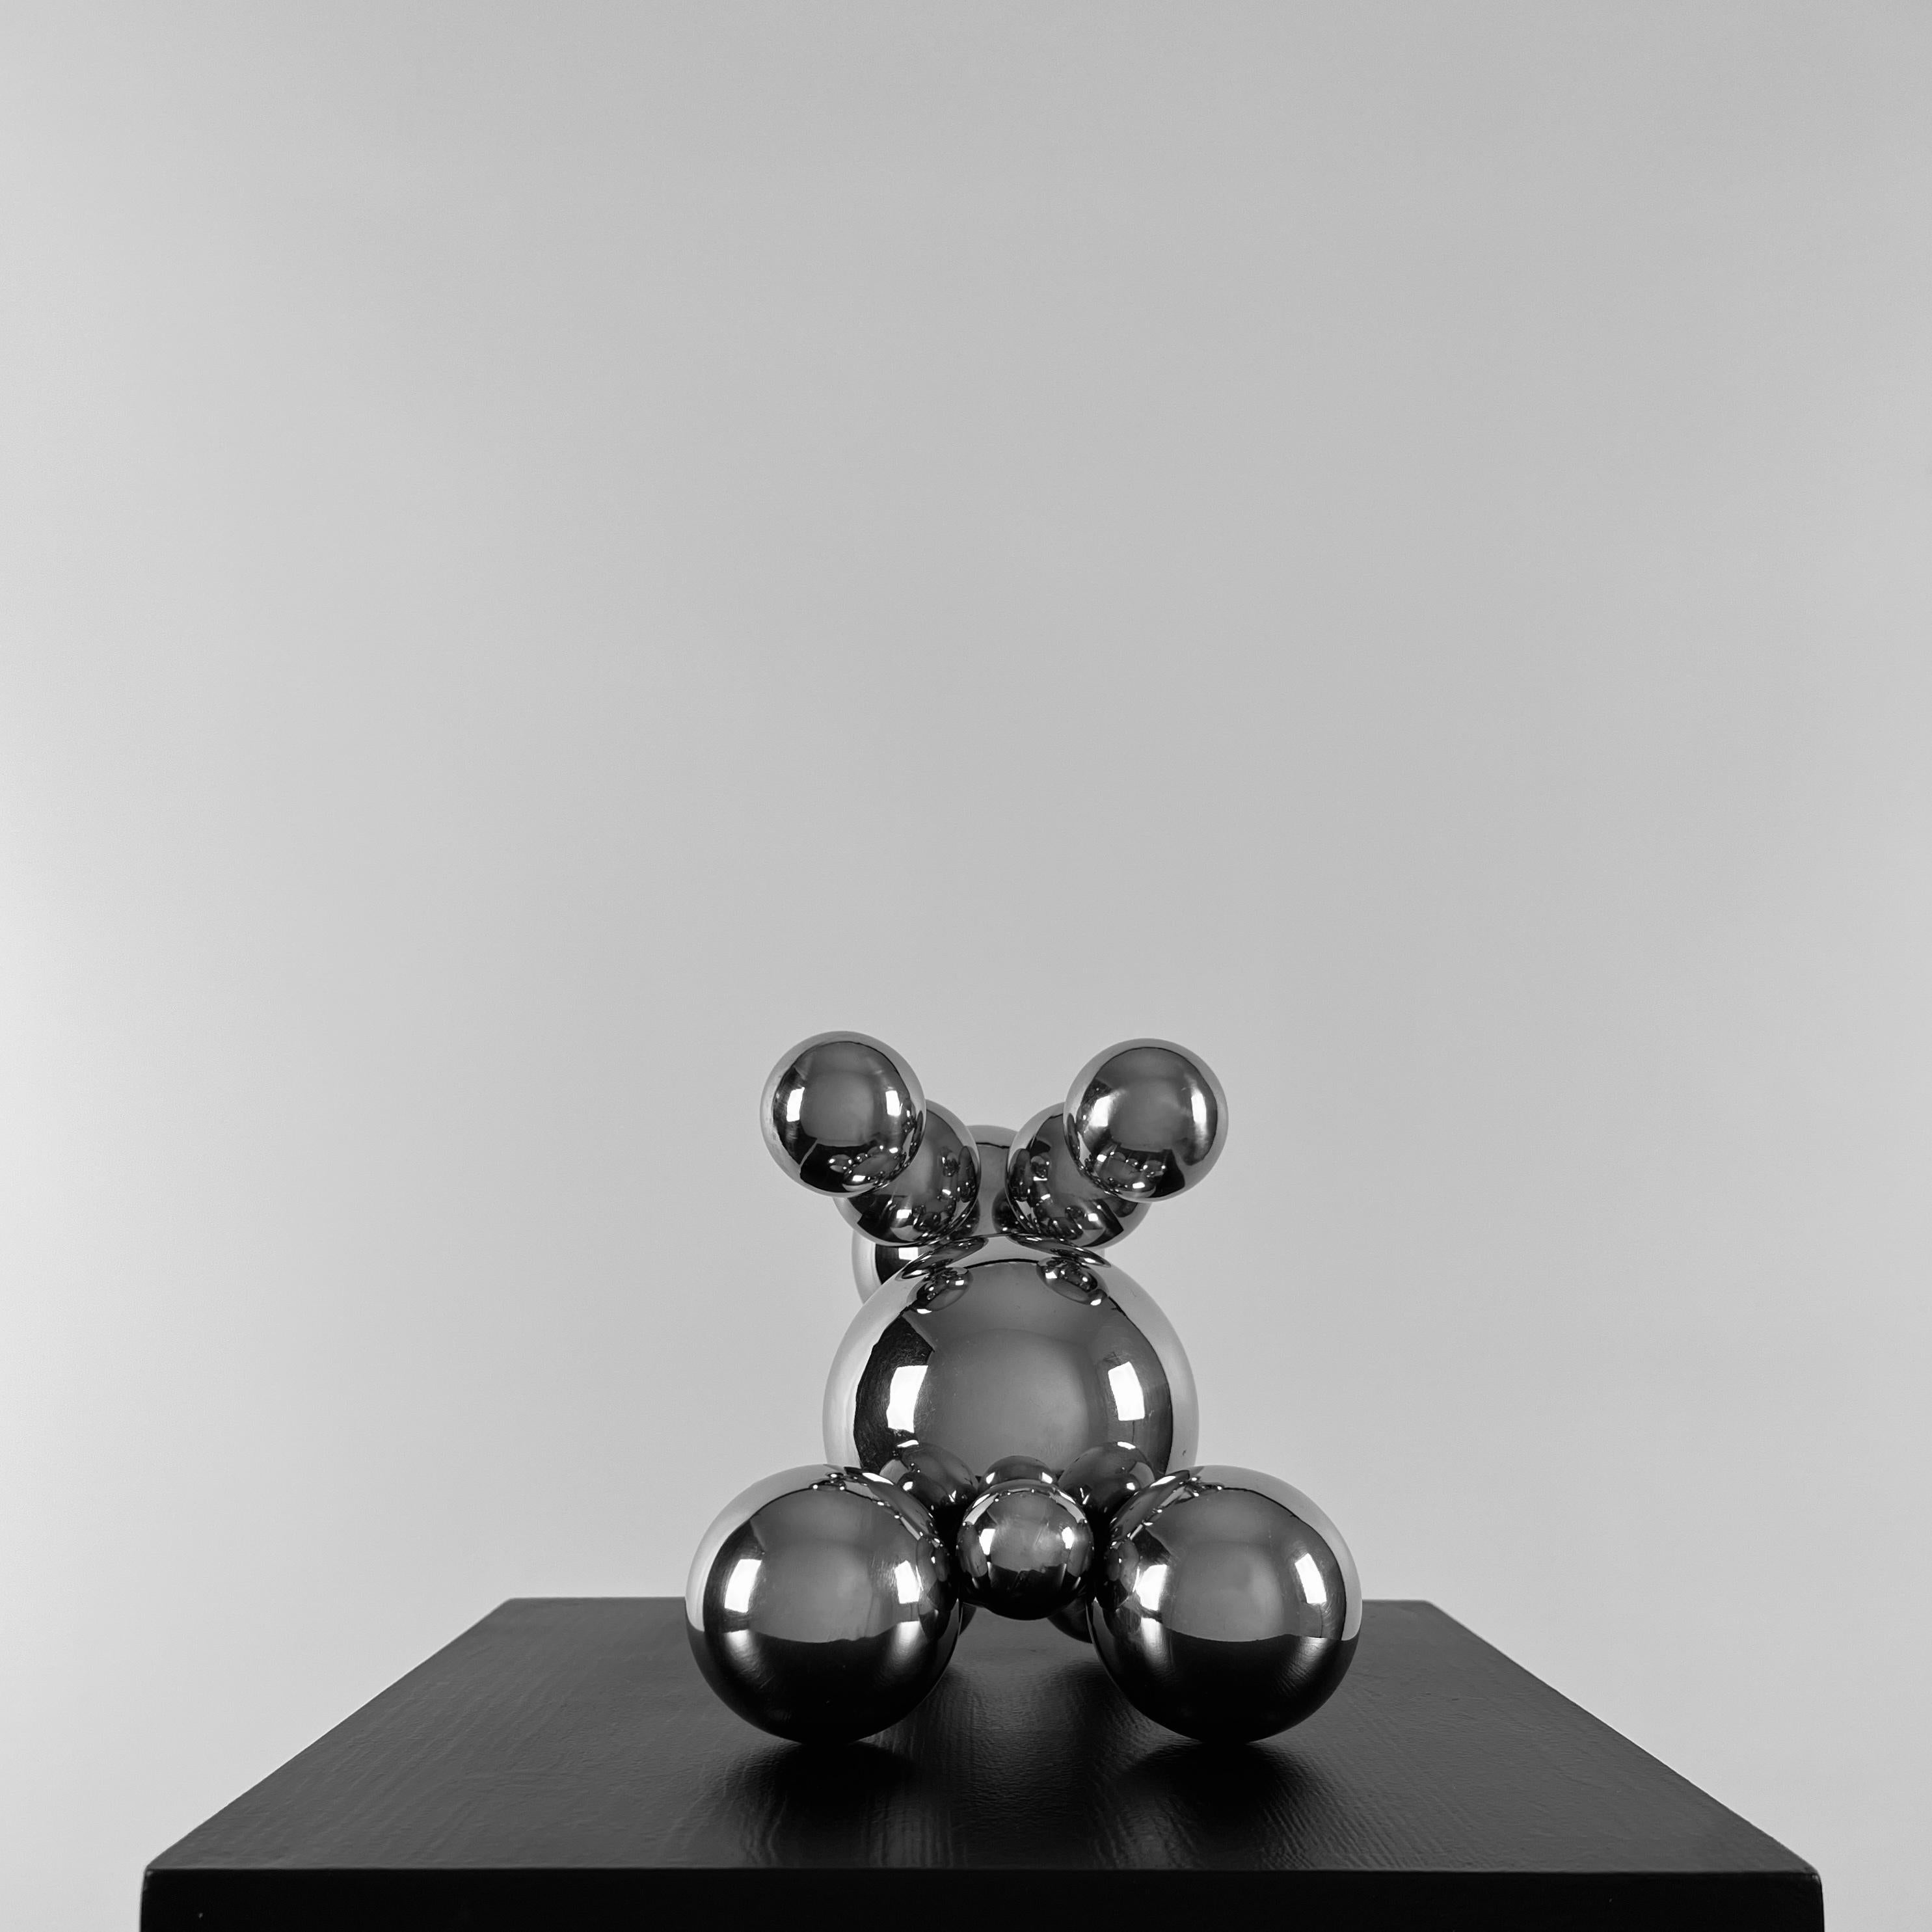 Stainless Steel Rabbit Robot Minimalistic Robot Sculpture 9